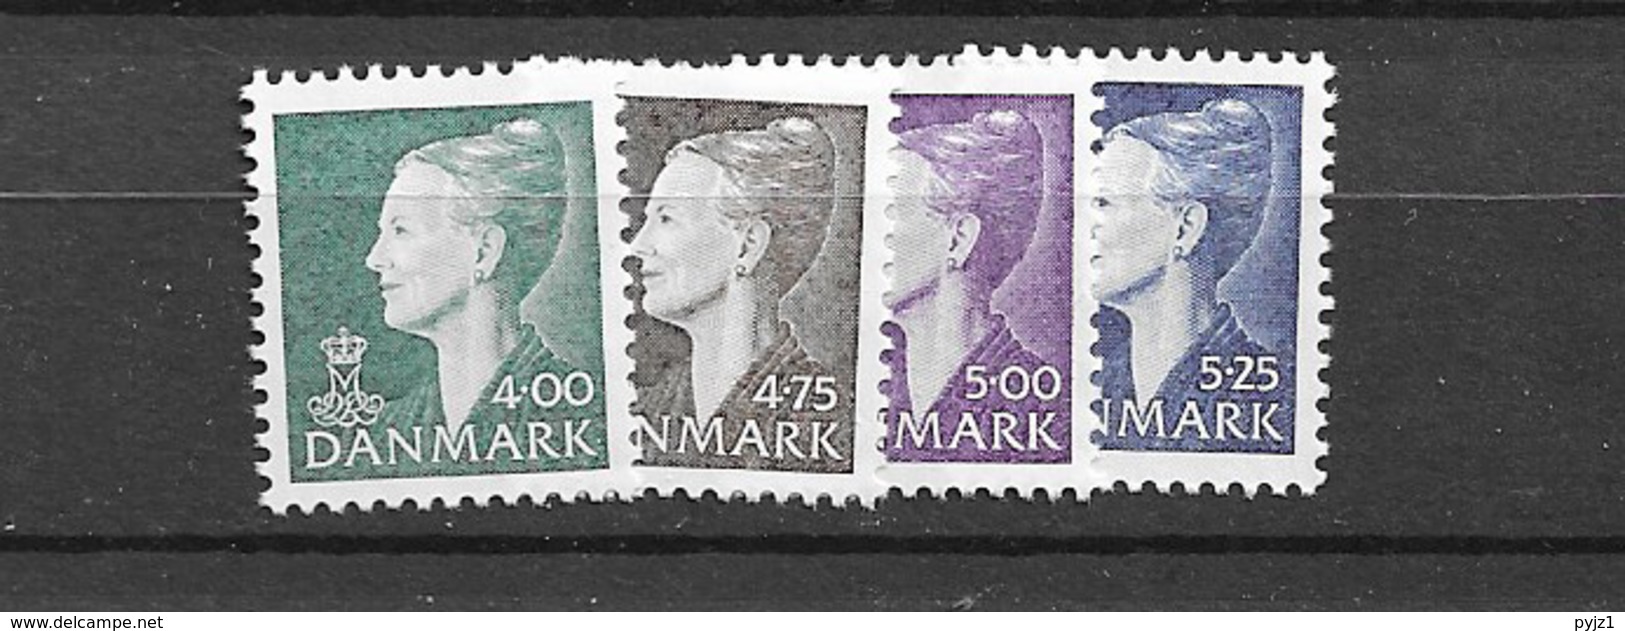 1997 MNH Danmark, Michel 1158-61 Postfris** - Unused Stamps